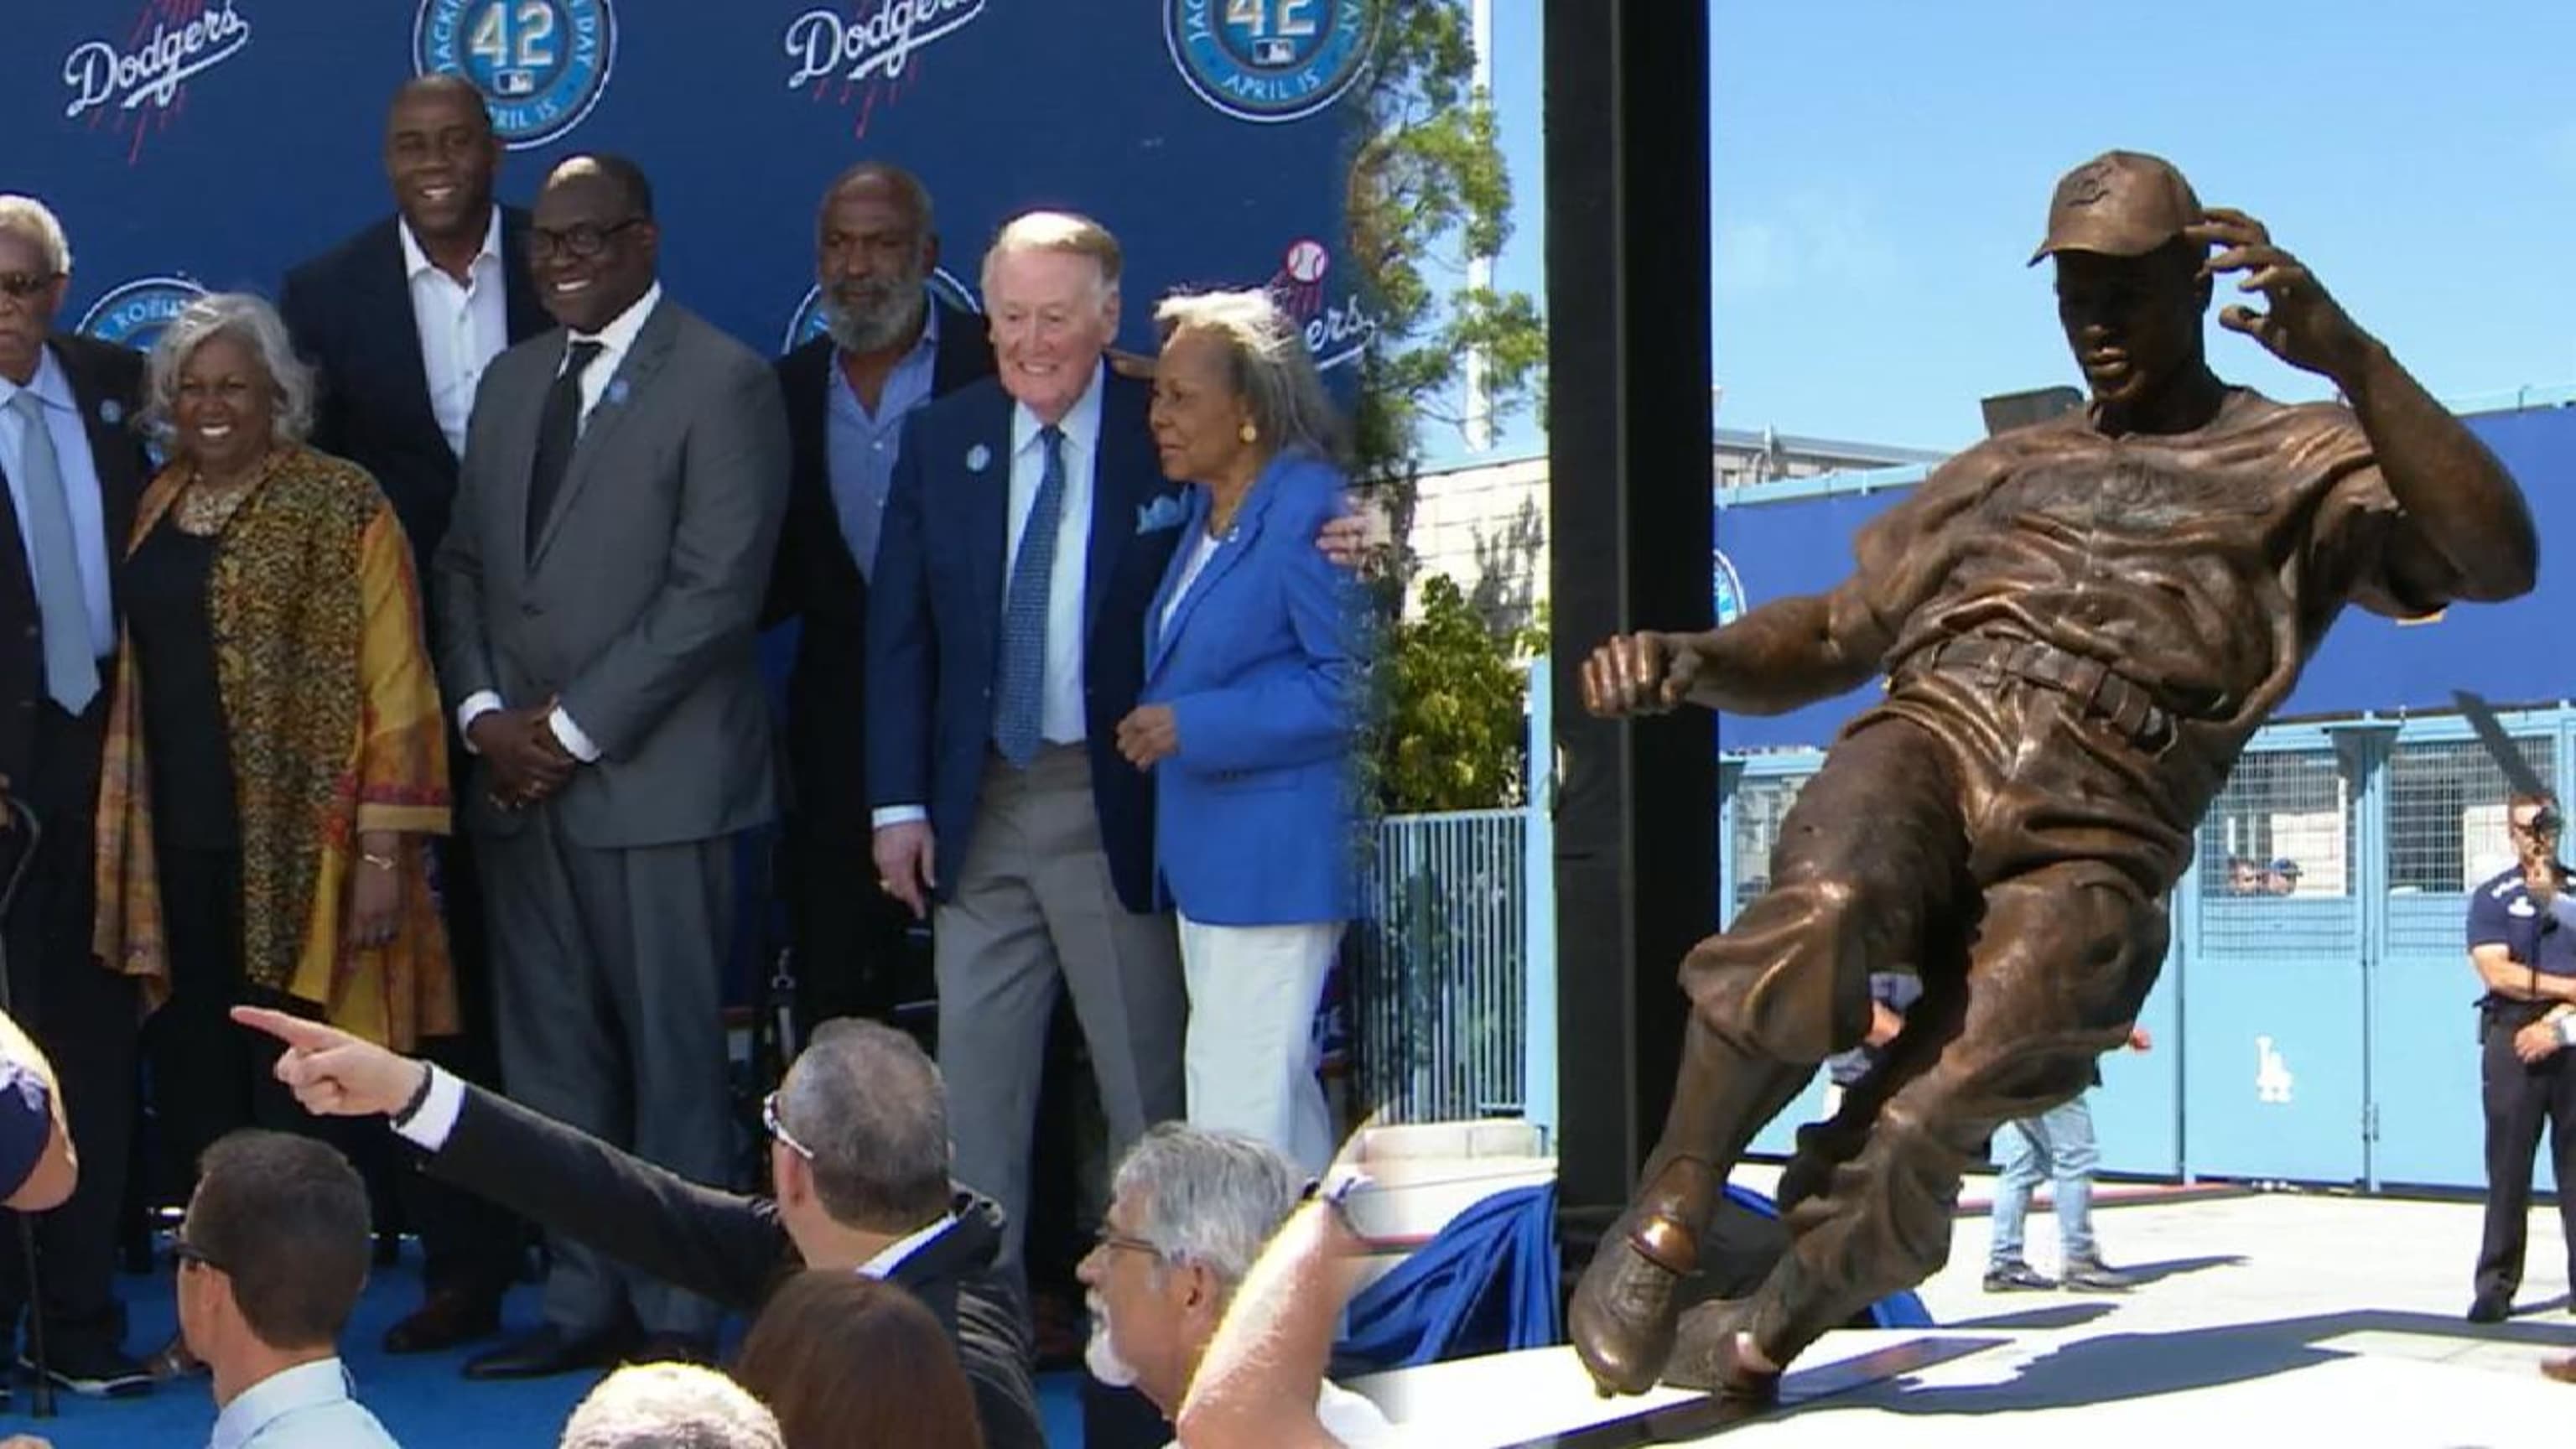 Biloxi Dodgers unveil commemorative logo ahead of Jackie Robinson Day